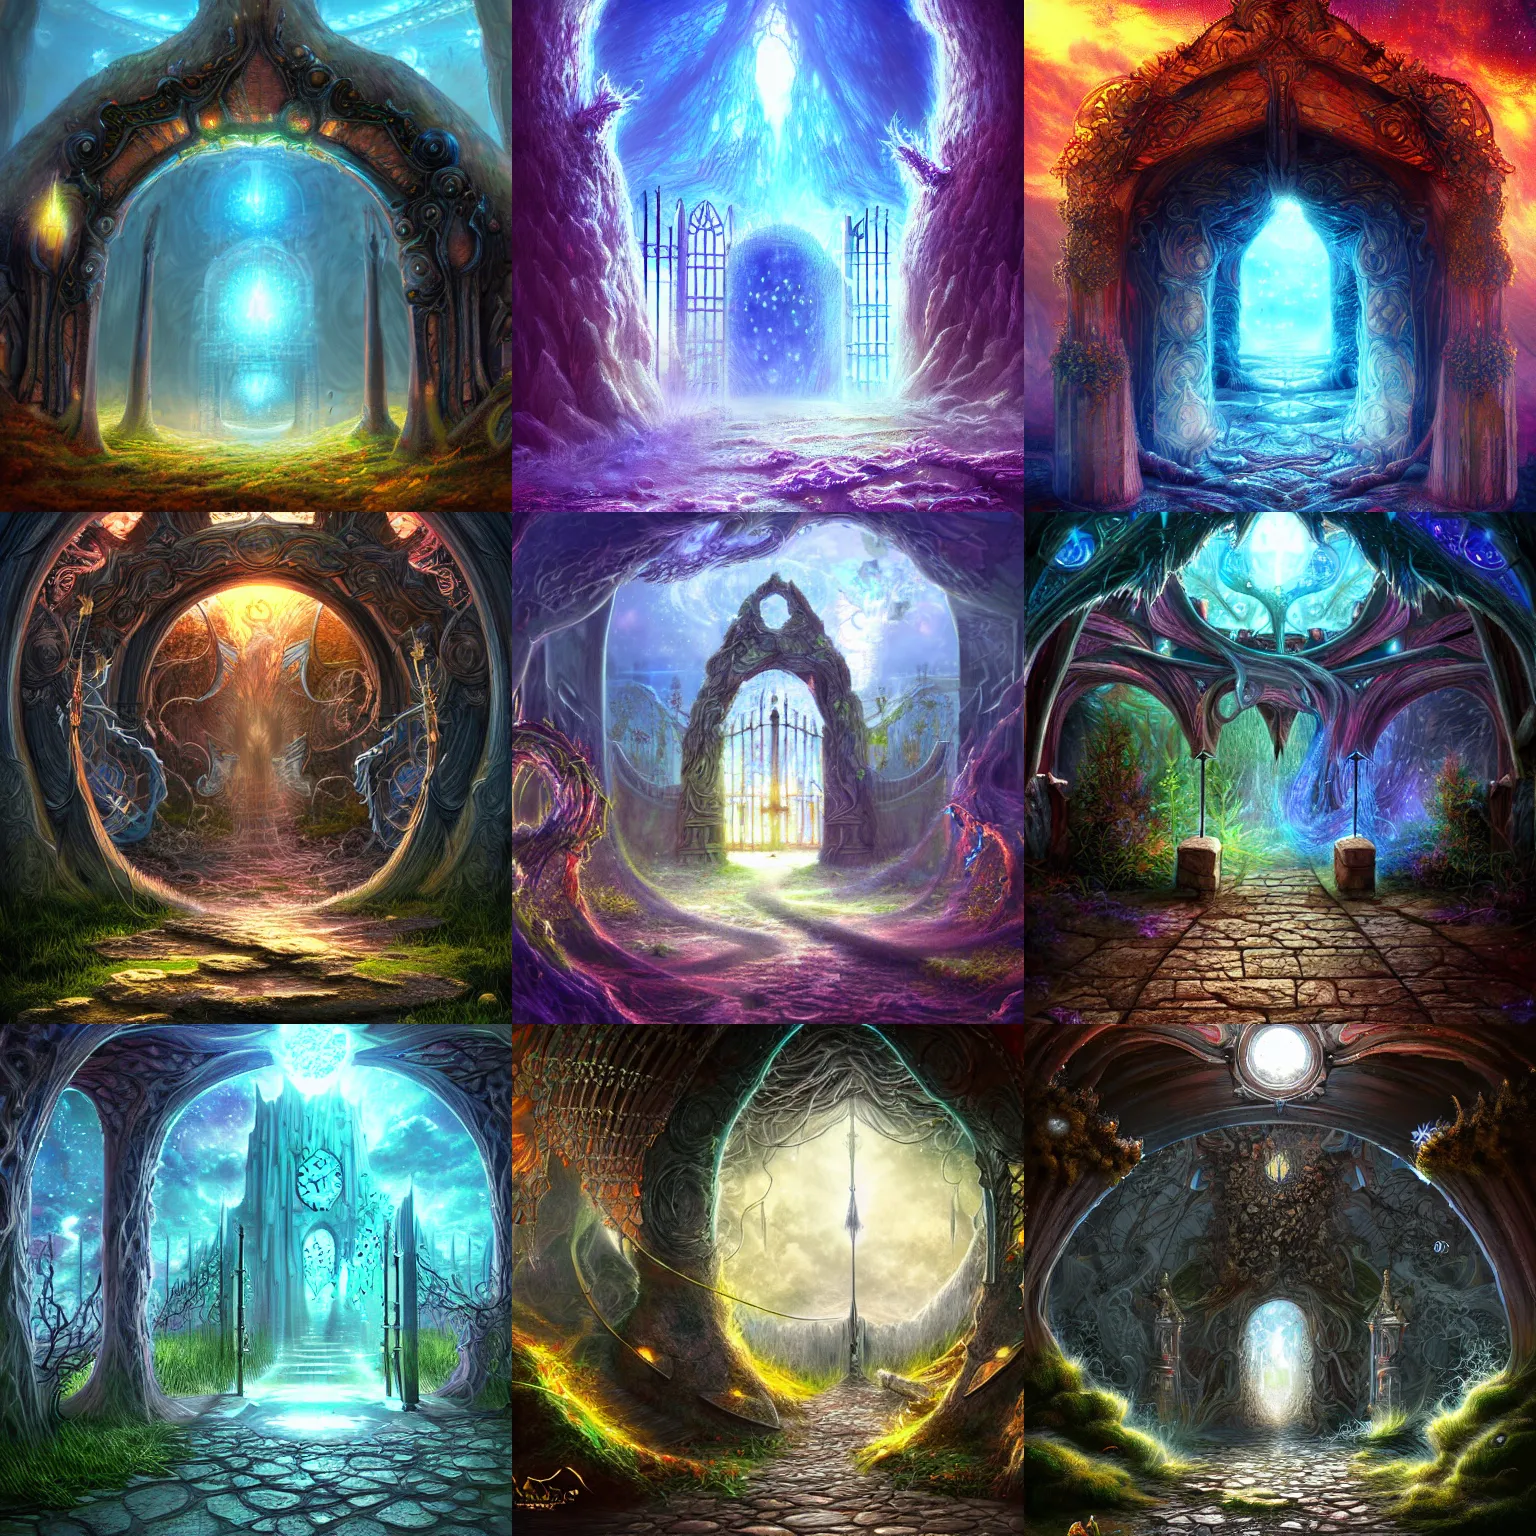 Prompt: The gate to the eternal kingdom of mycelium, fantasy, digital art, HD, detailed.